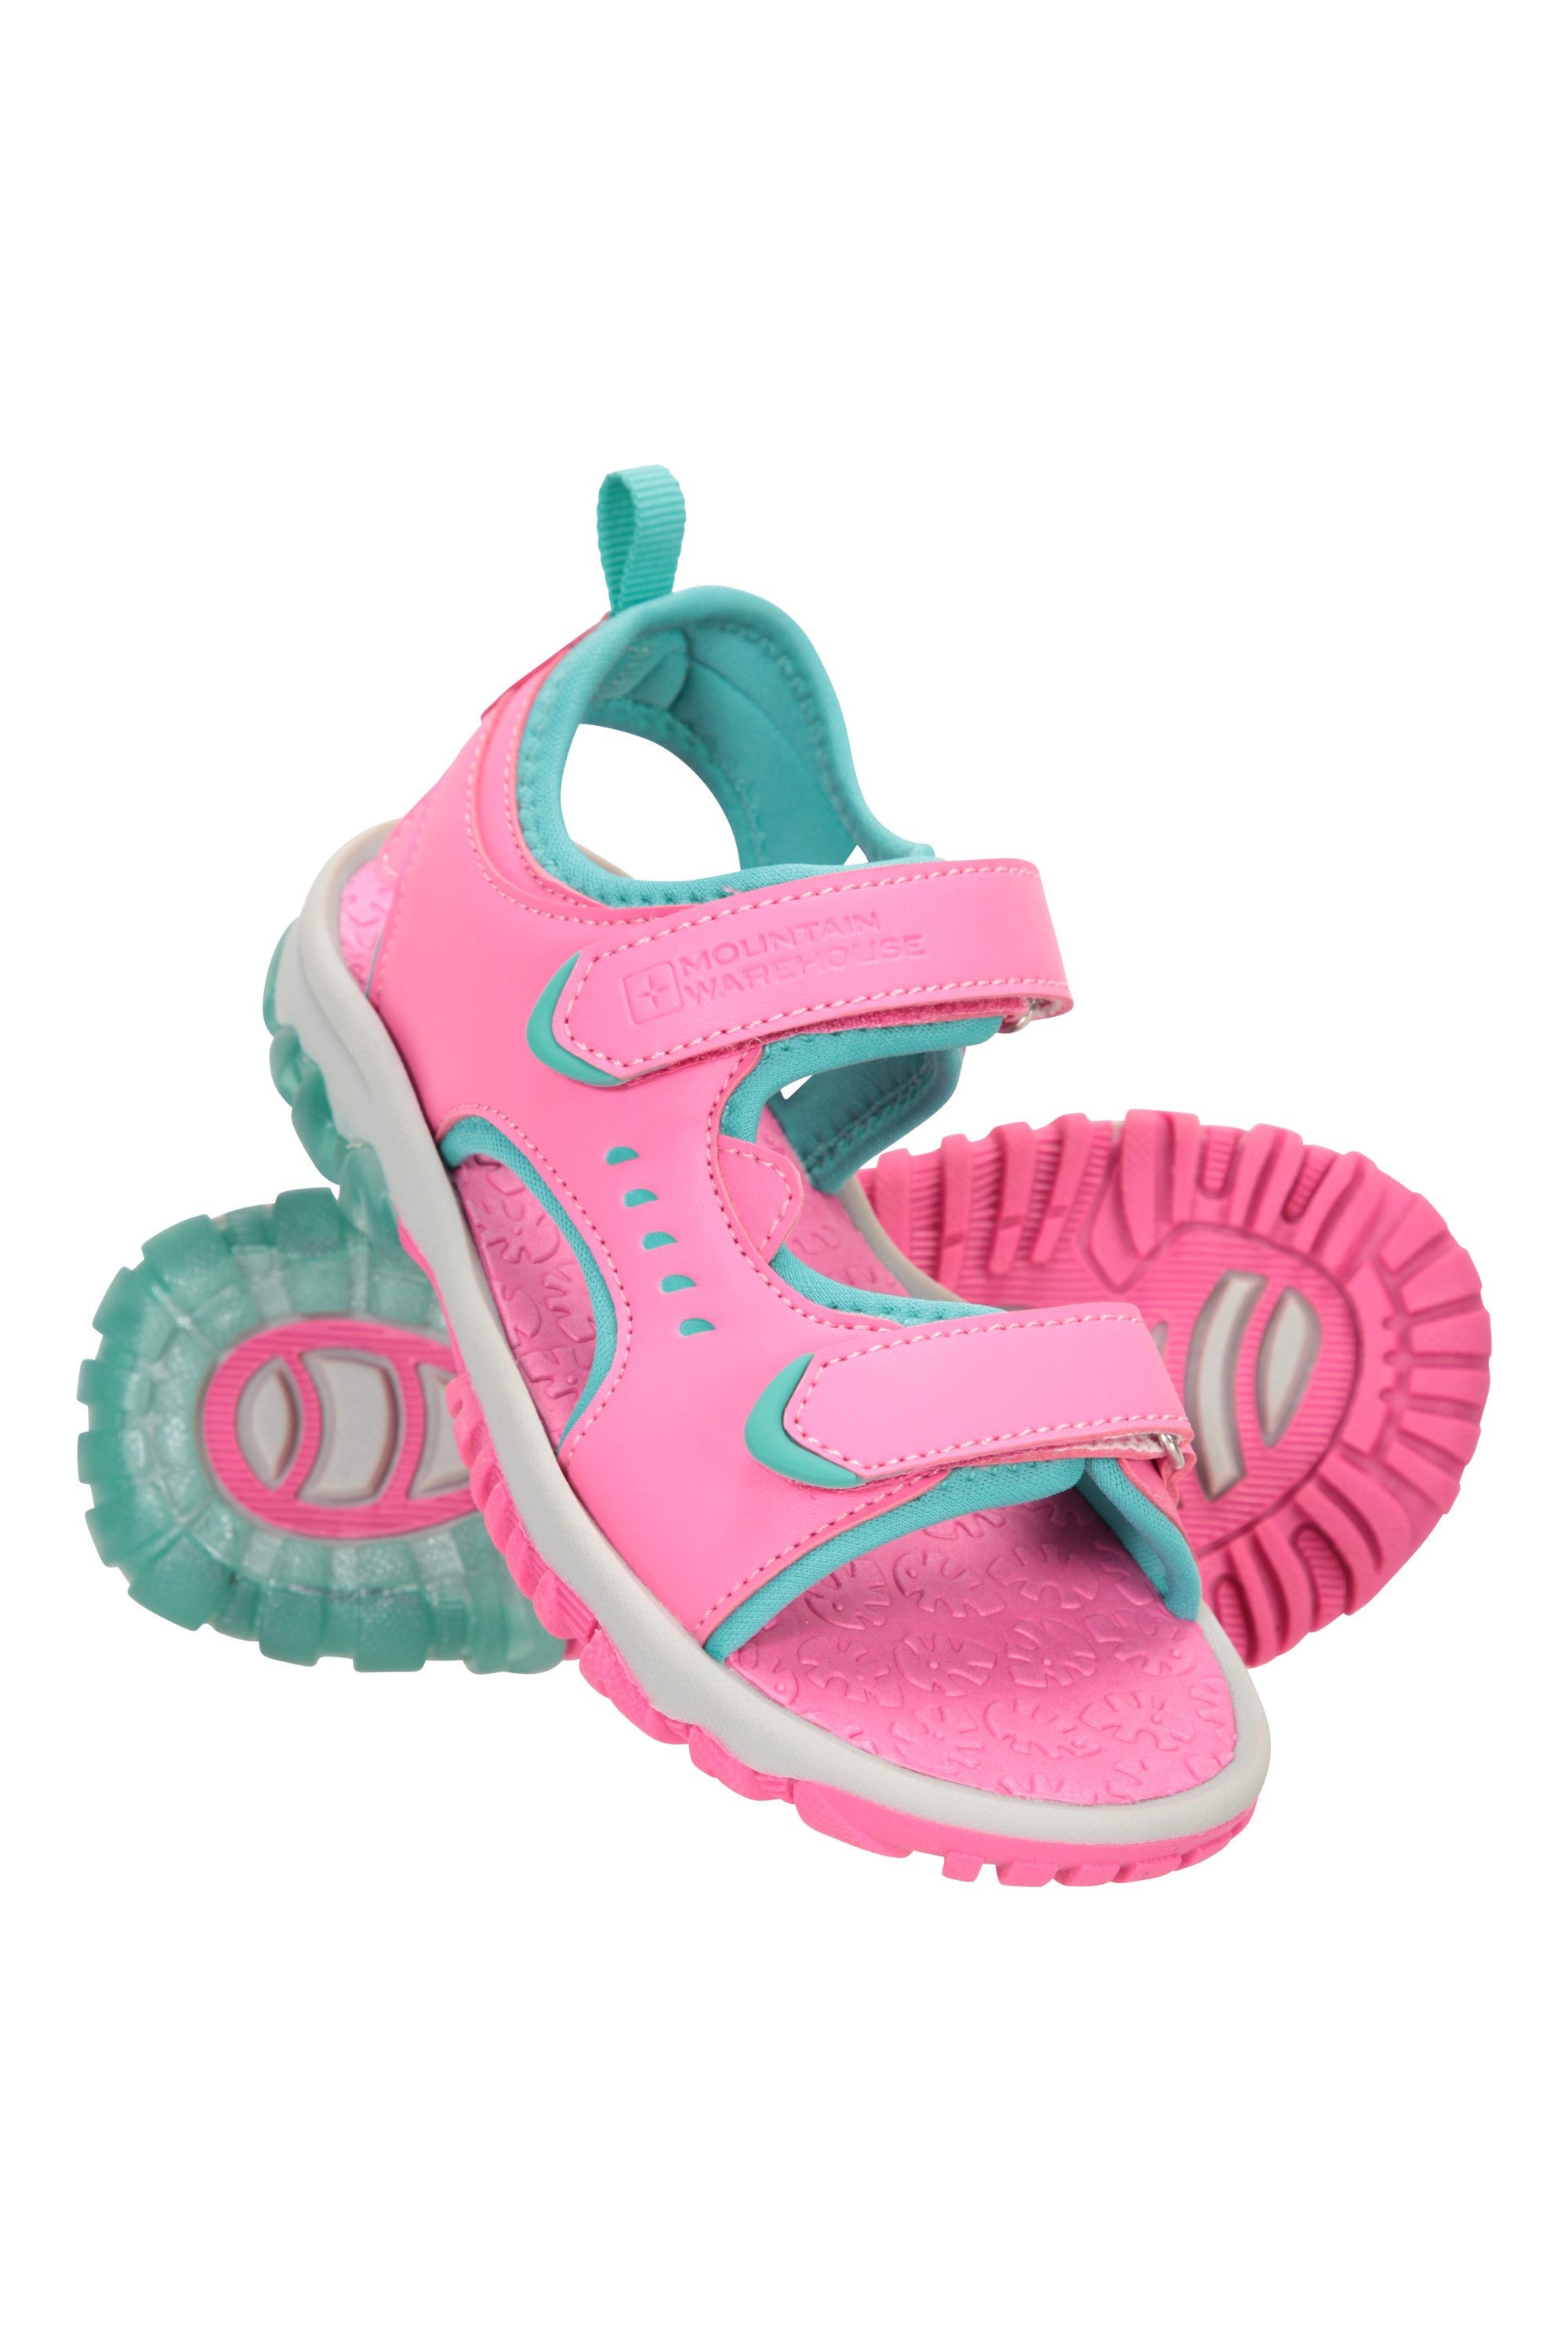 Marine Light-Up Kids Sandals - Bright Pink